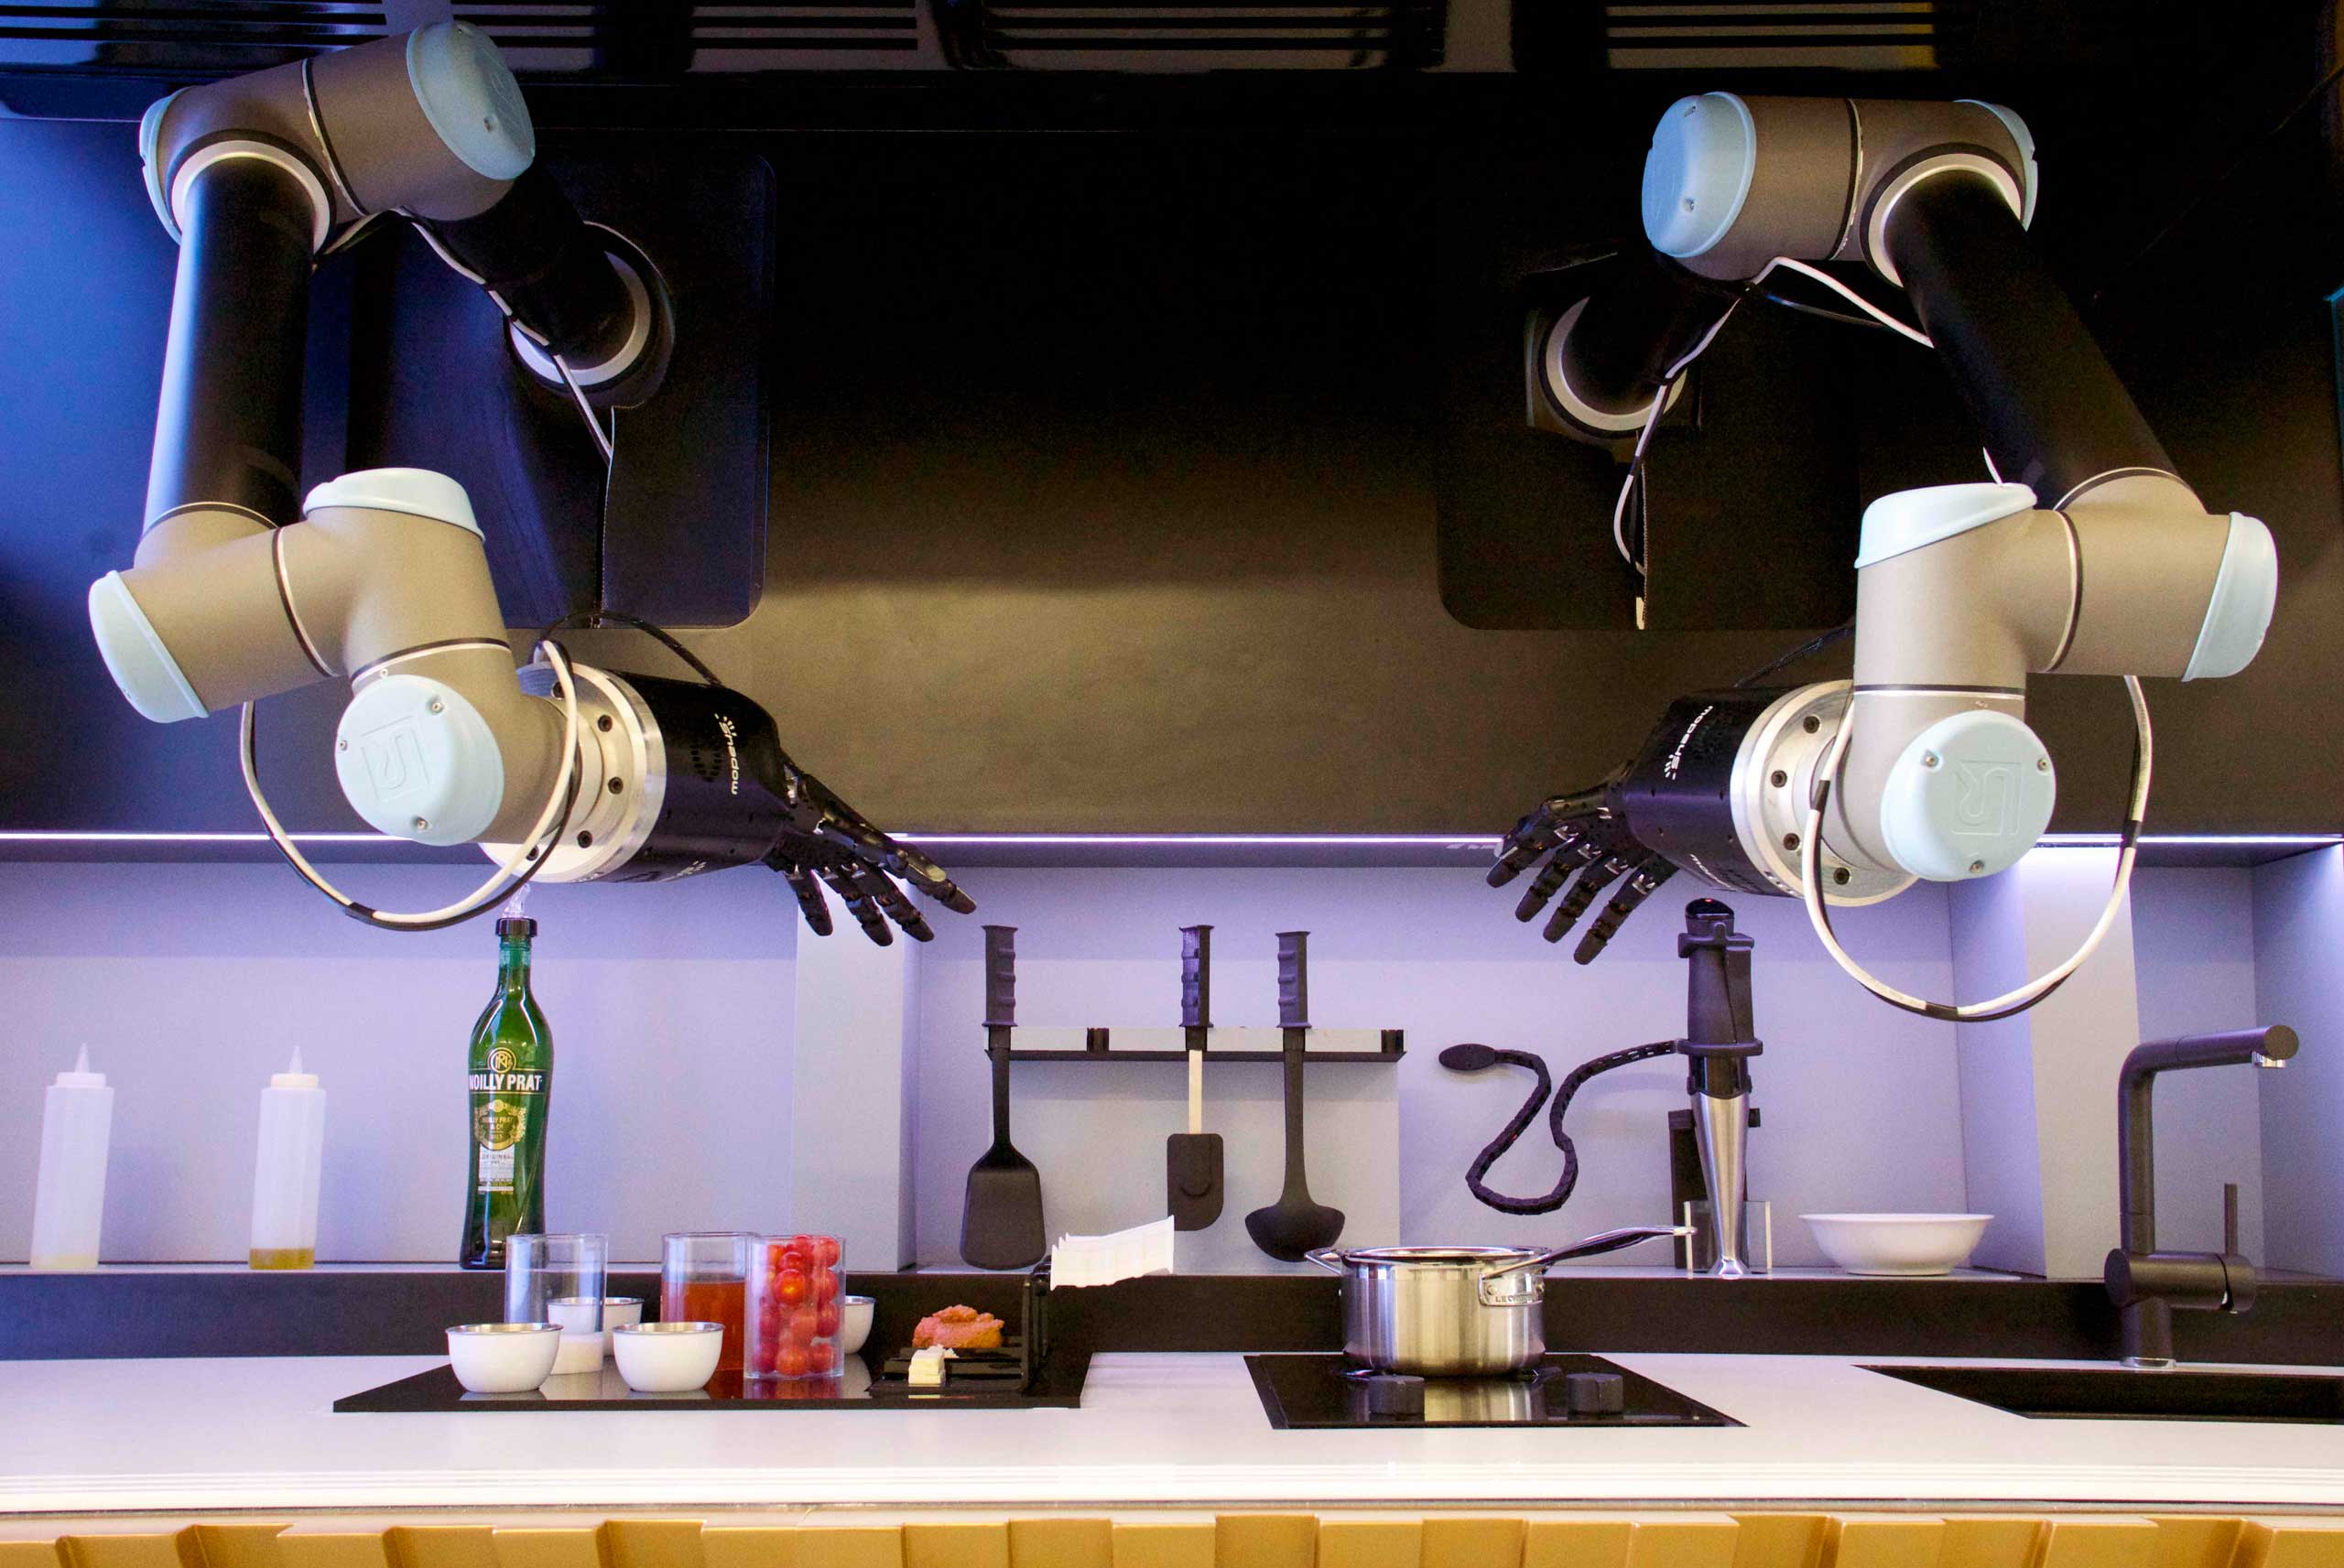 An automated kitchen by Moley Robotics. (Moley Robotics)